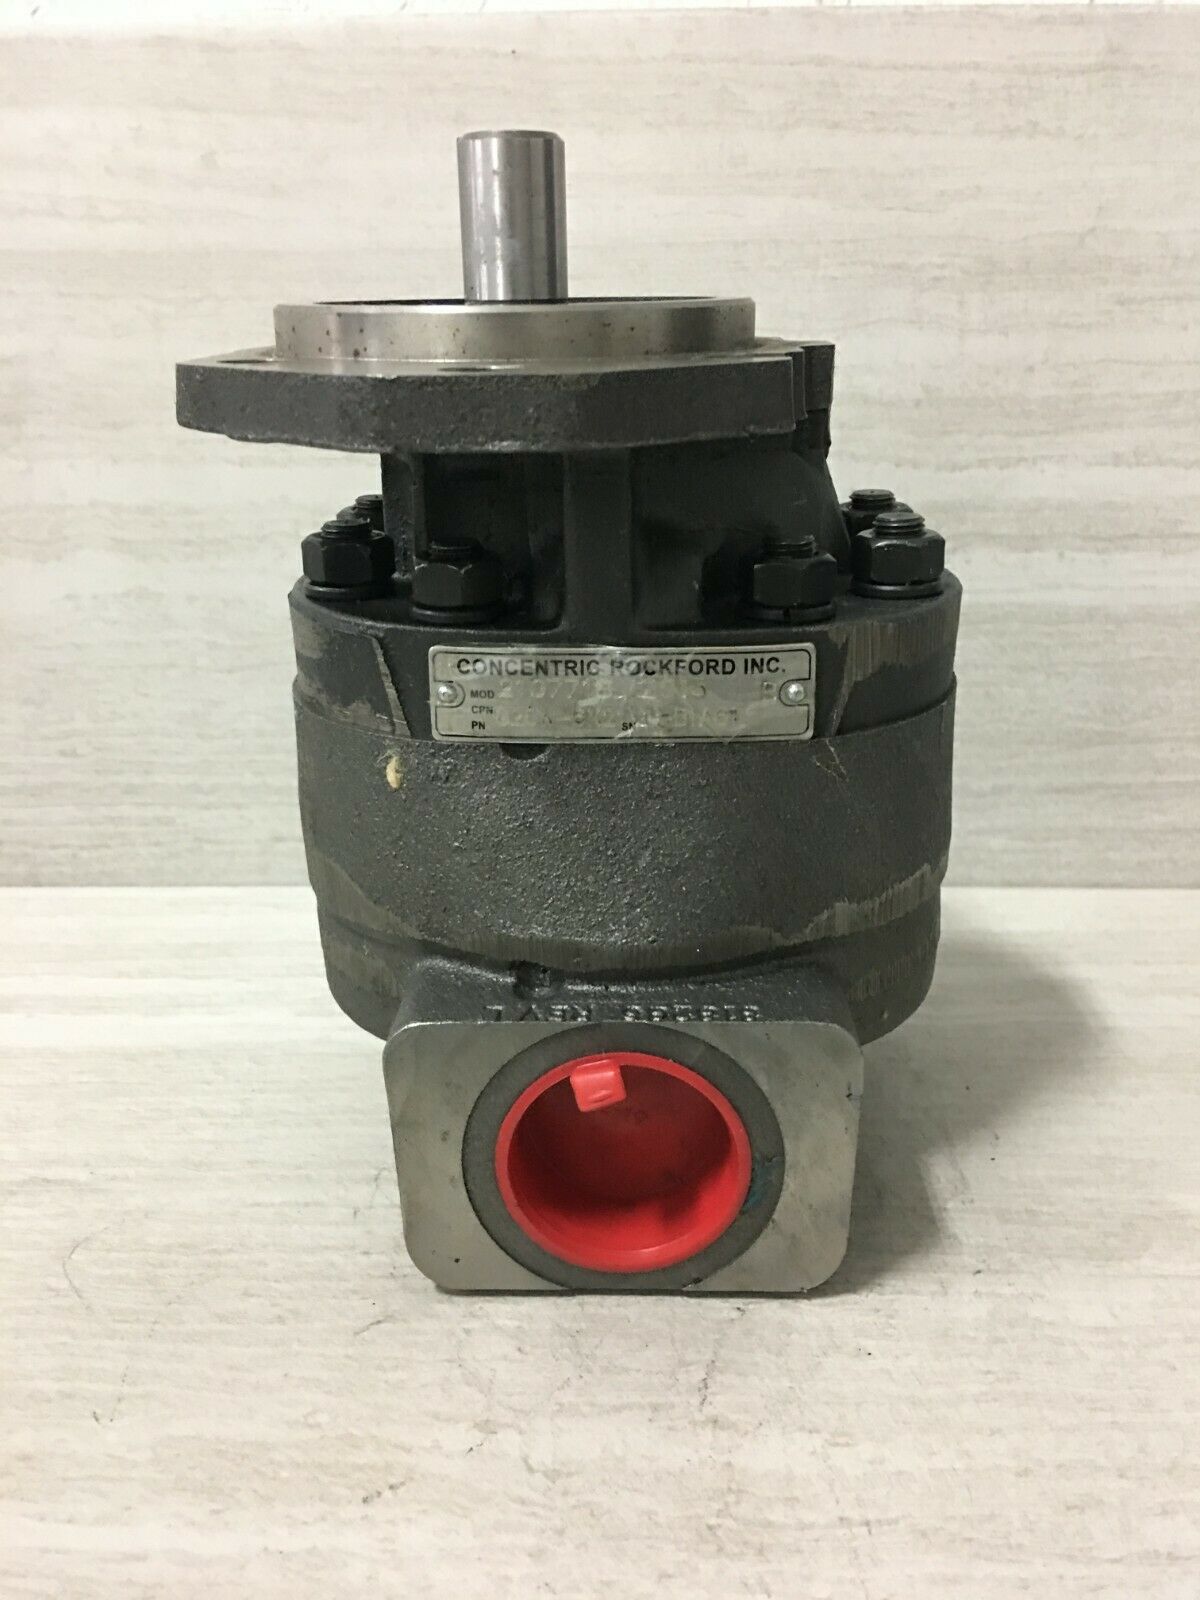 Haldex High Performance Gear Pump-1.159 Cu in #1801522 